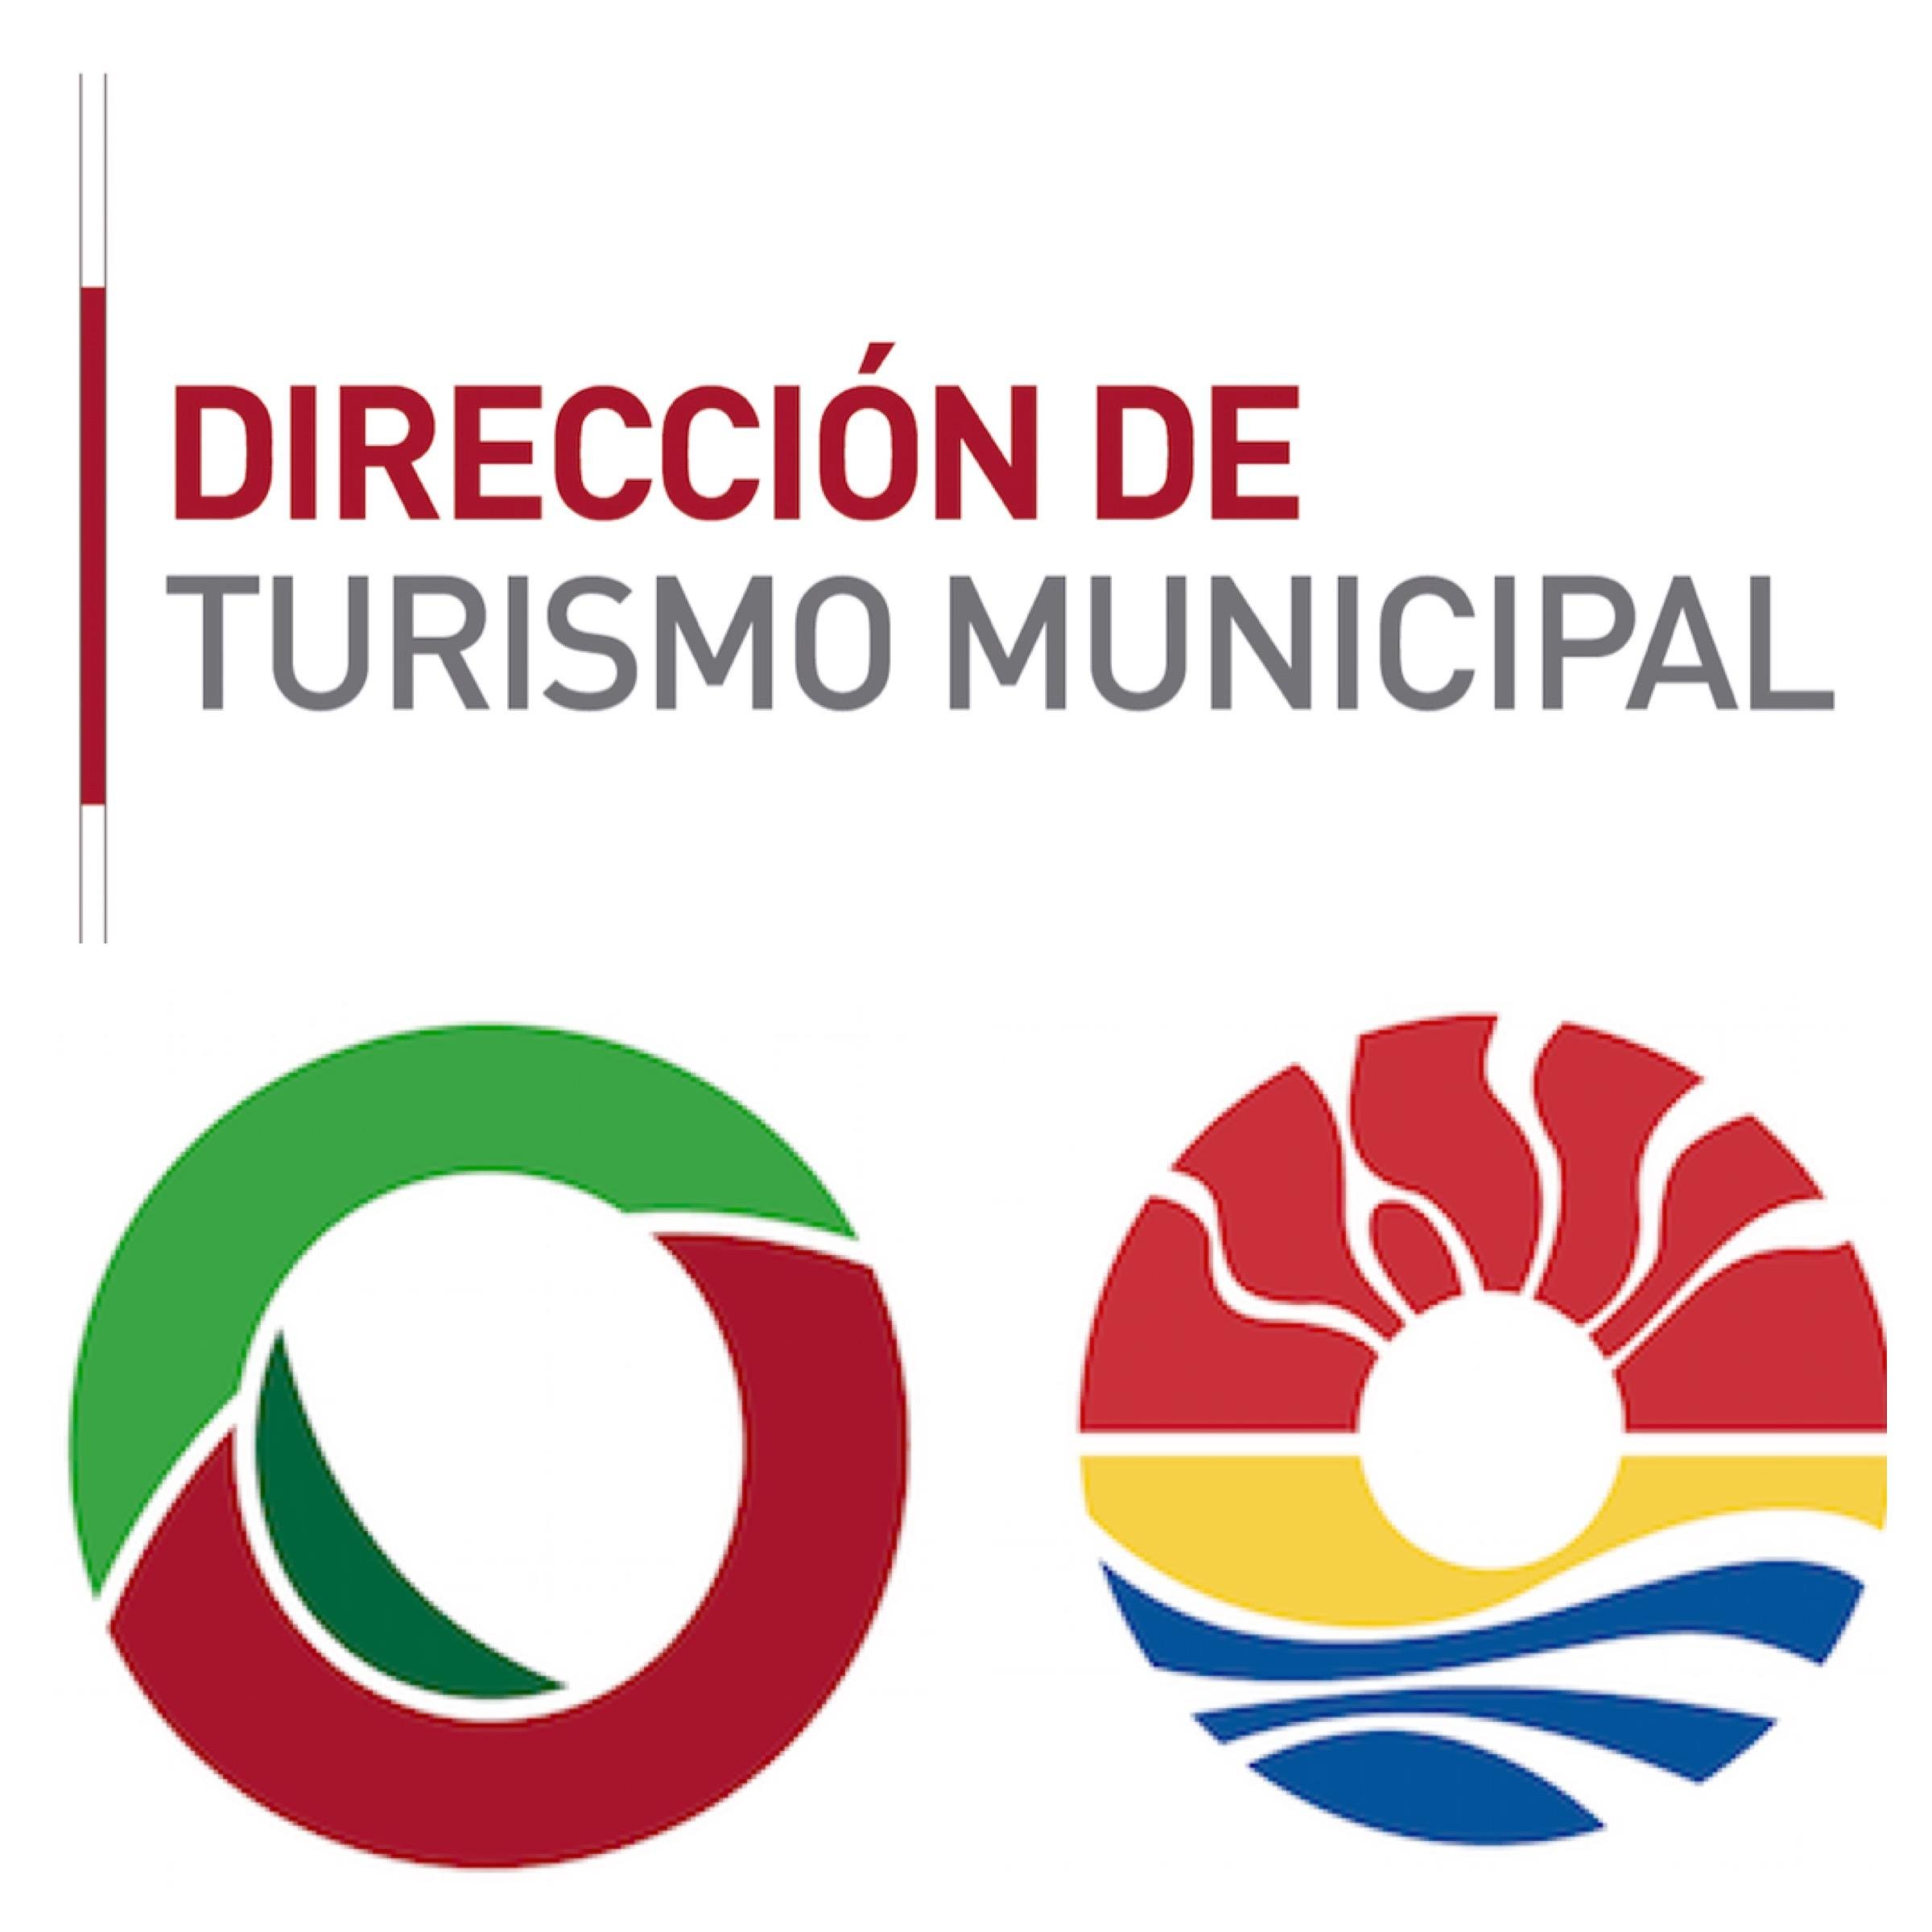 Twitter Oficial de la Dirección de Turismo Municipal de Benito Juárez http://t.co/PFfducBhcj